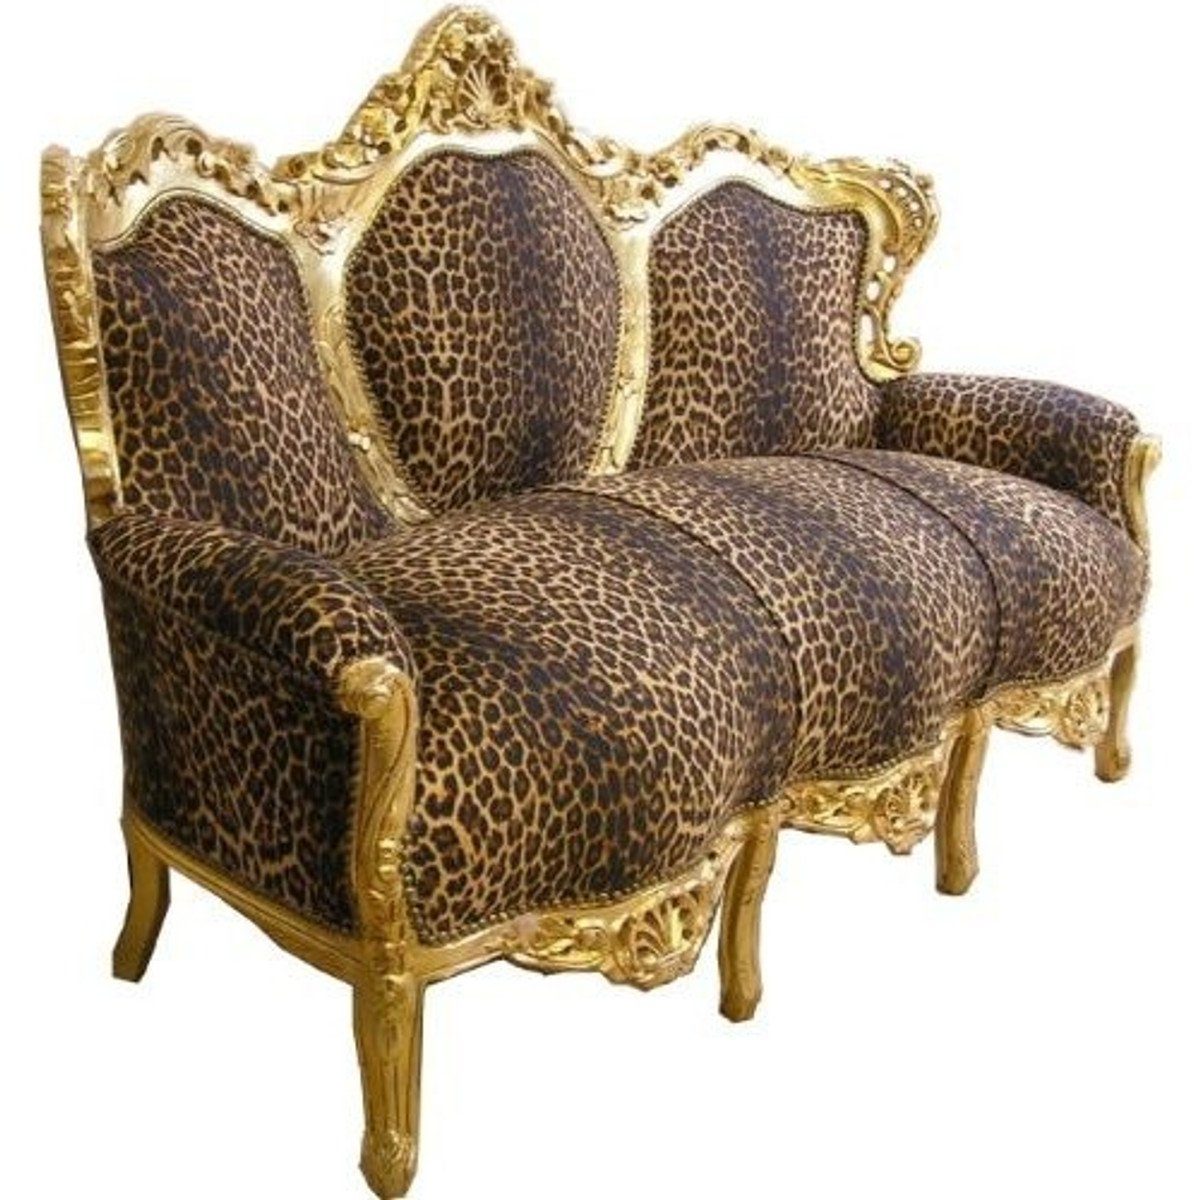 Couch Tiger Leo Sofa - Stil Padrino Barock Antik Möbel Leopard/Gold Sofa Casa Barock